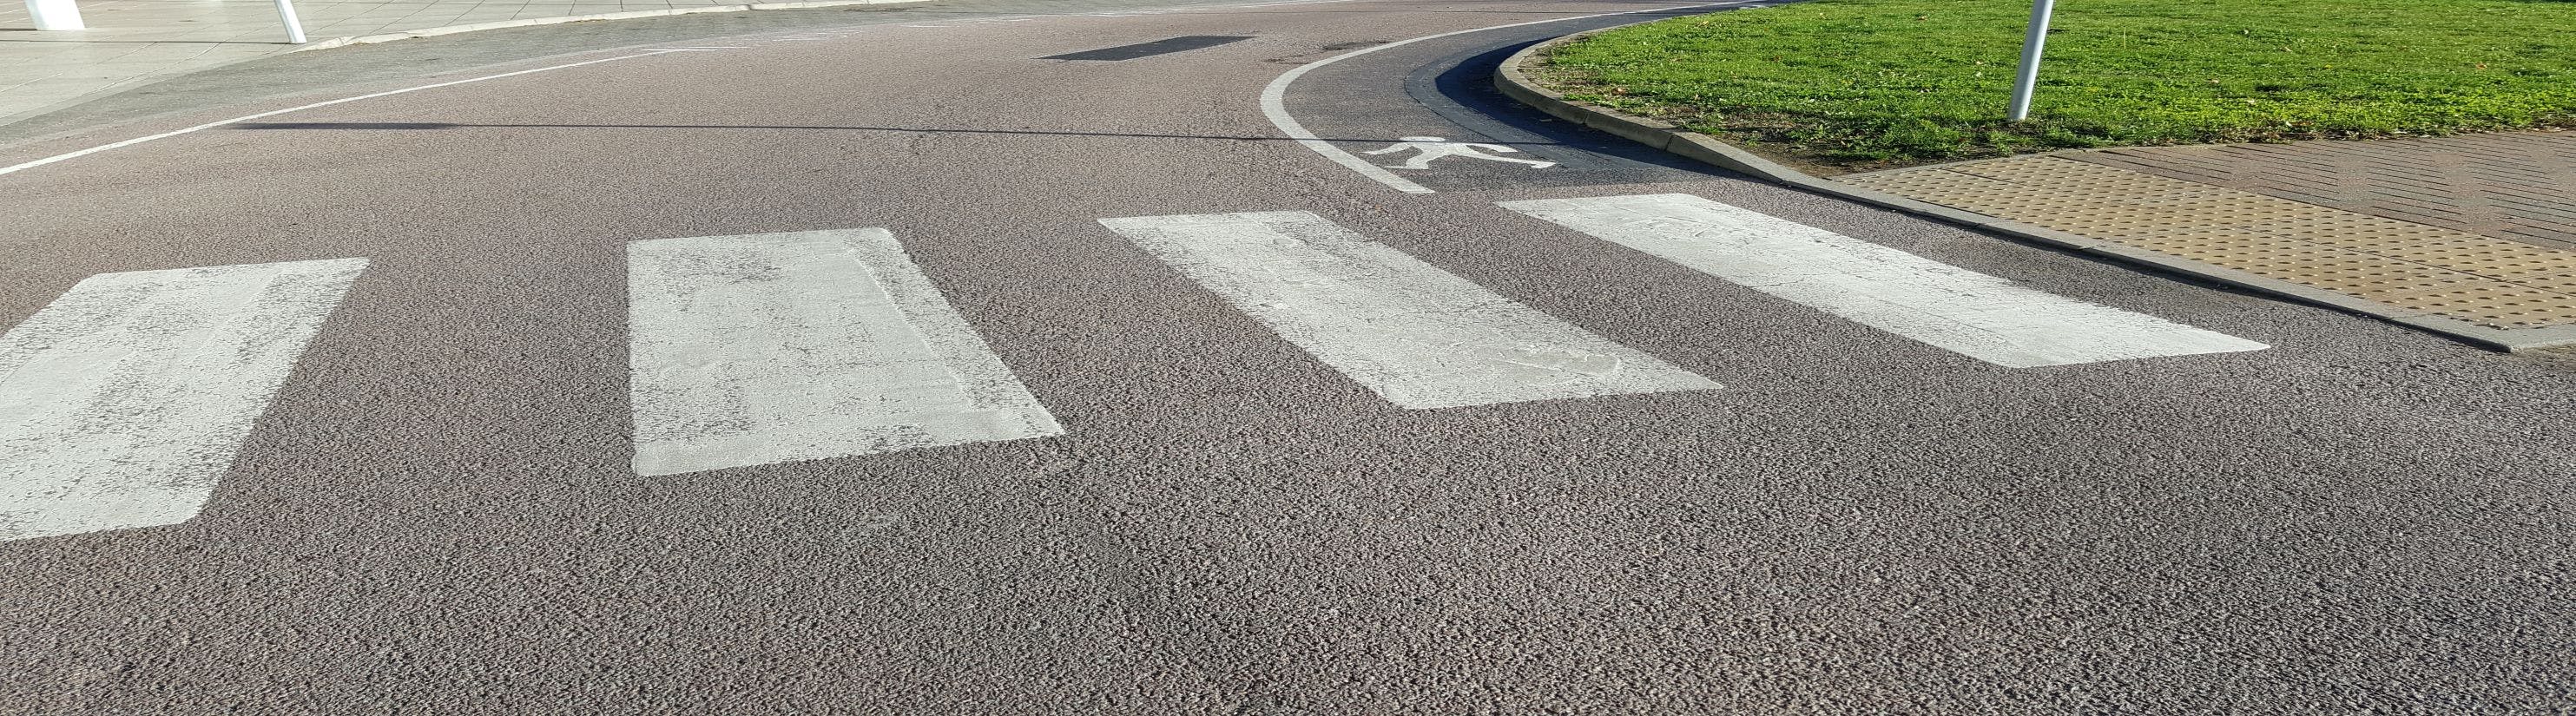 Photo of zebra crossing road markings.